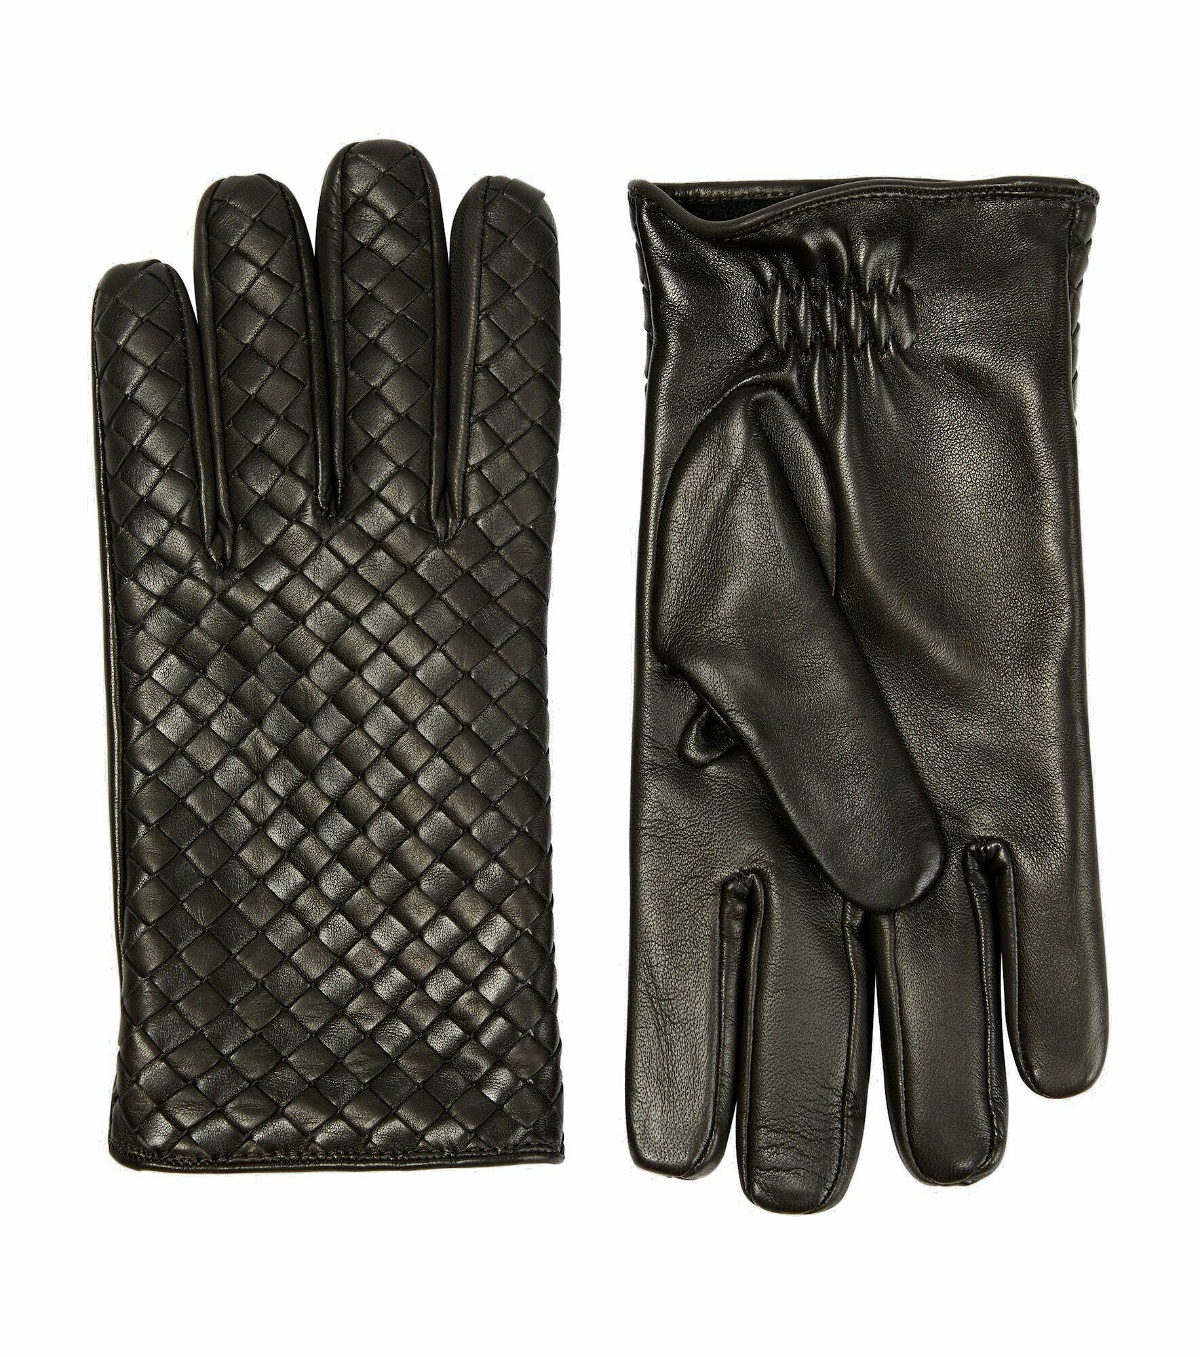 Bottega Veneta - Intrecciato leather gloves Bottega Veneta